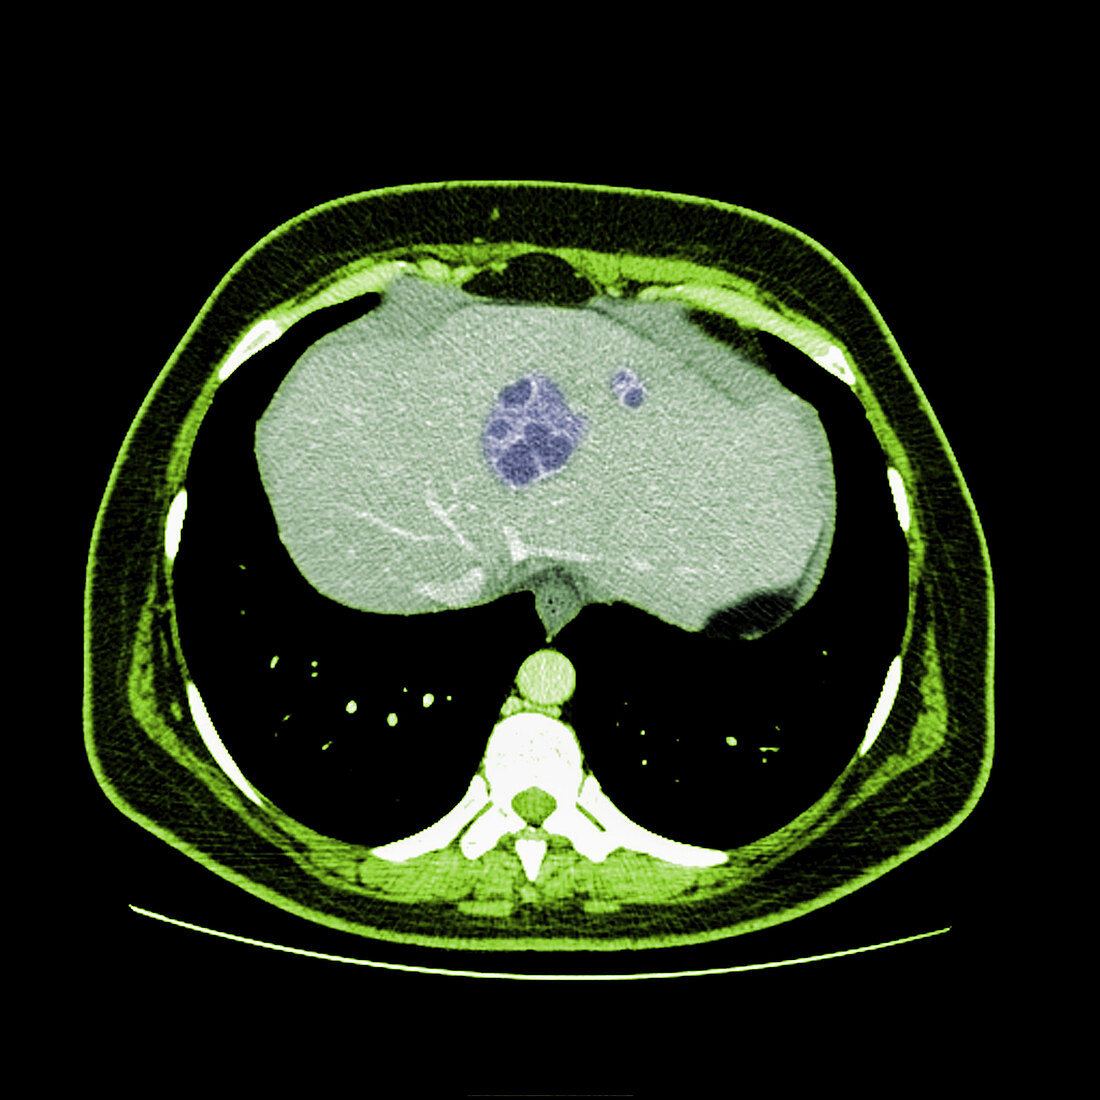 Liver abscess, CT scan